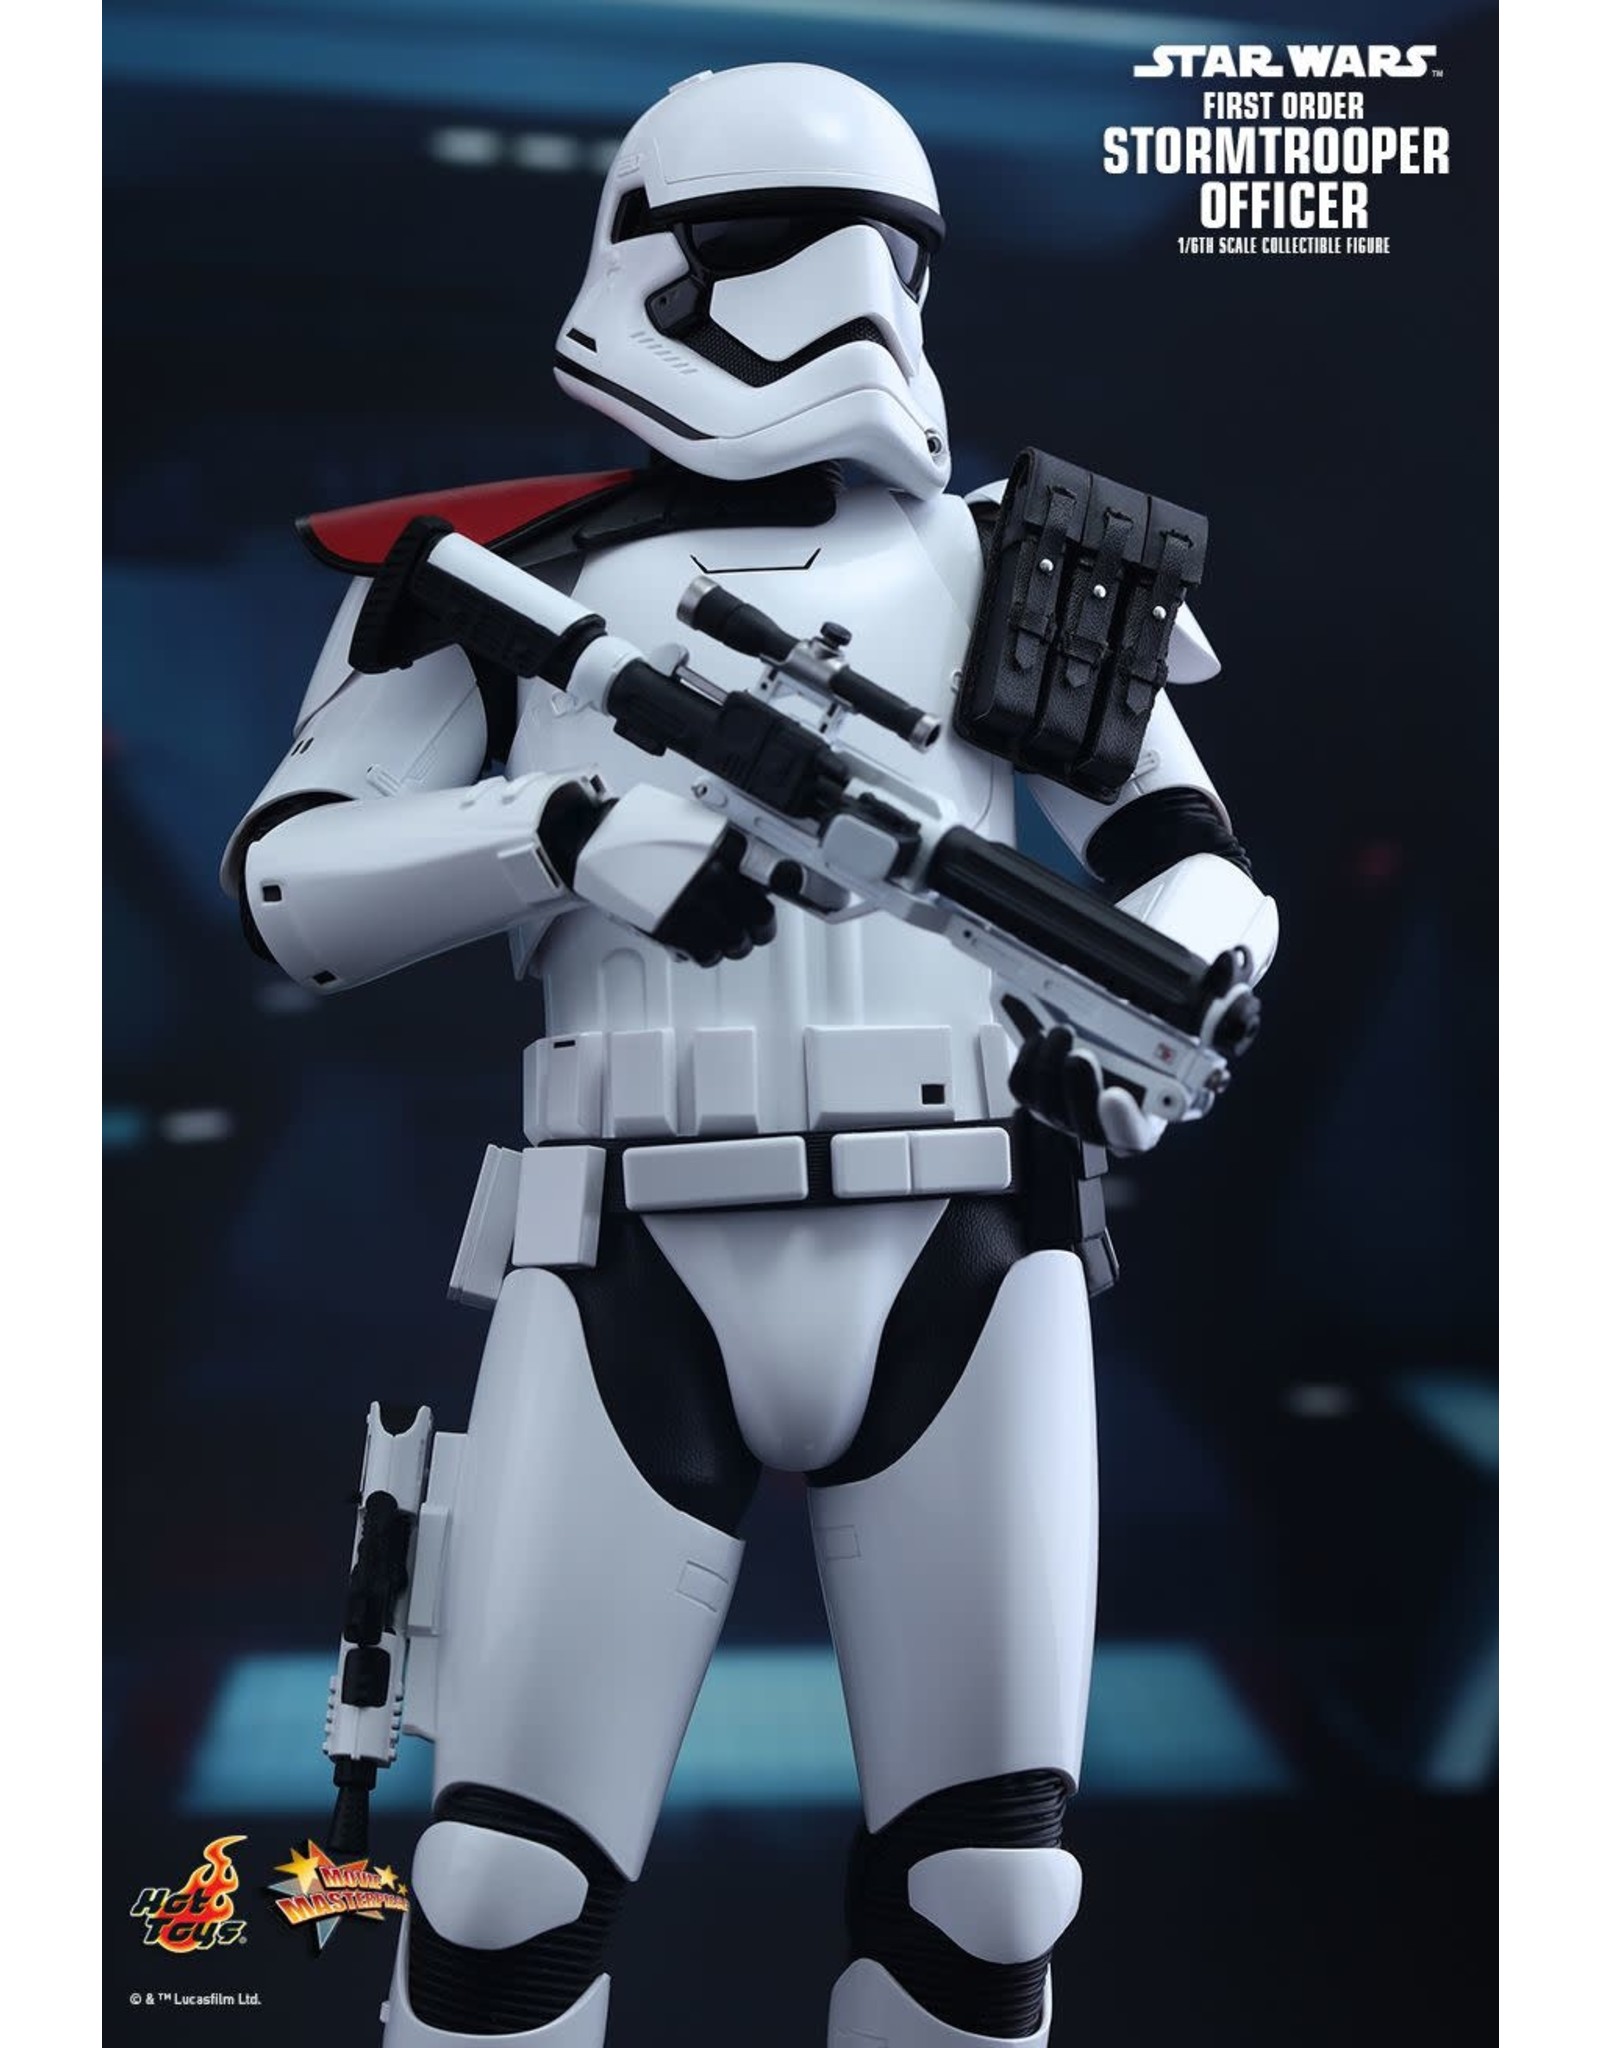 STAR WARS Set of 2 1:6 Scale Figures - First Order Stormtrooper  - PROMO